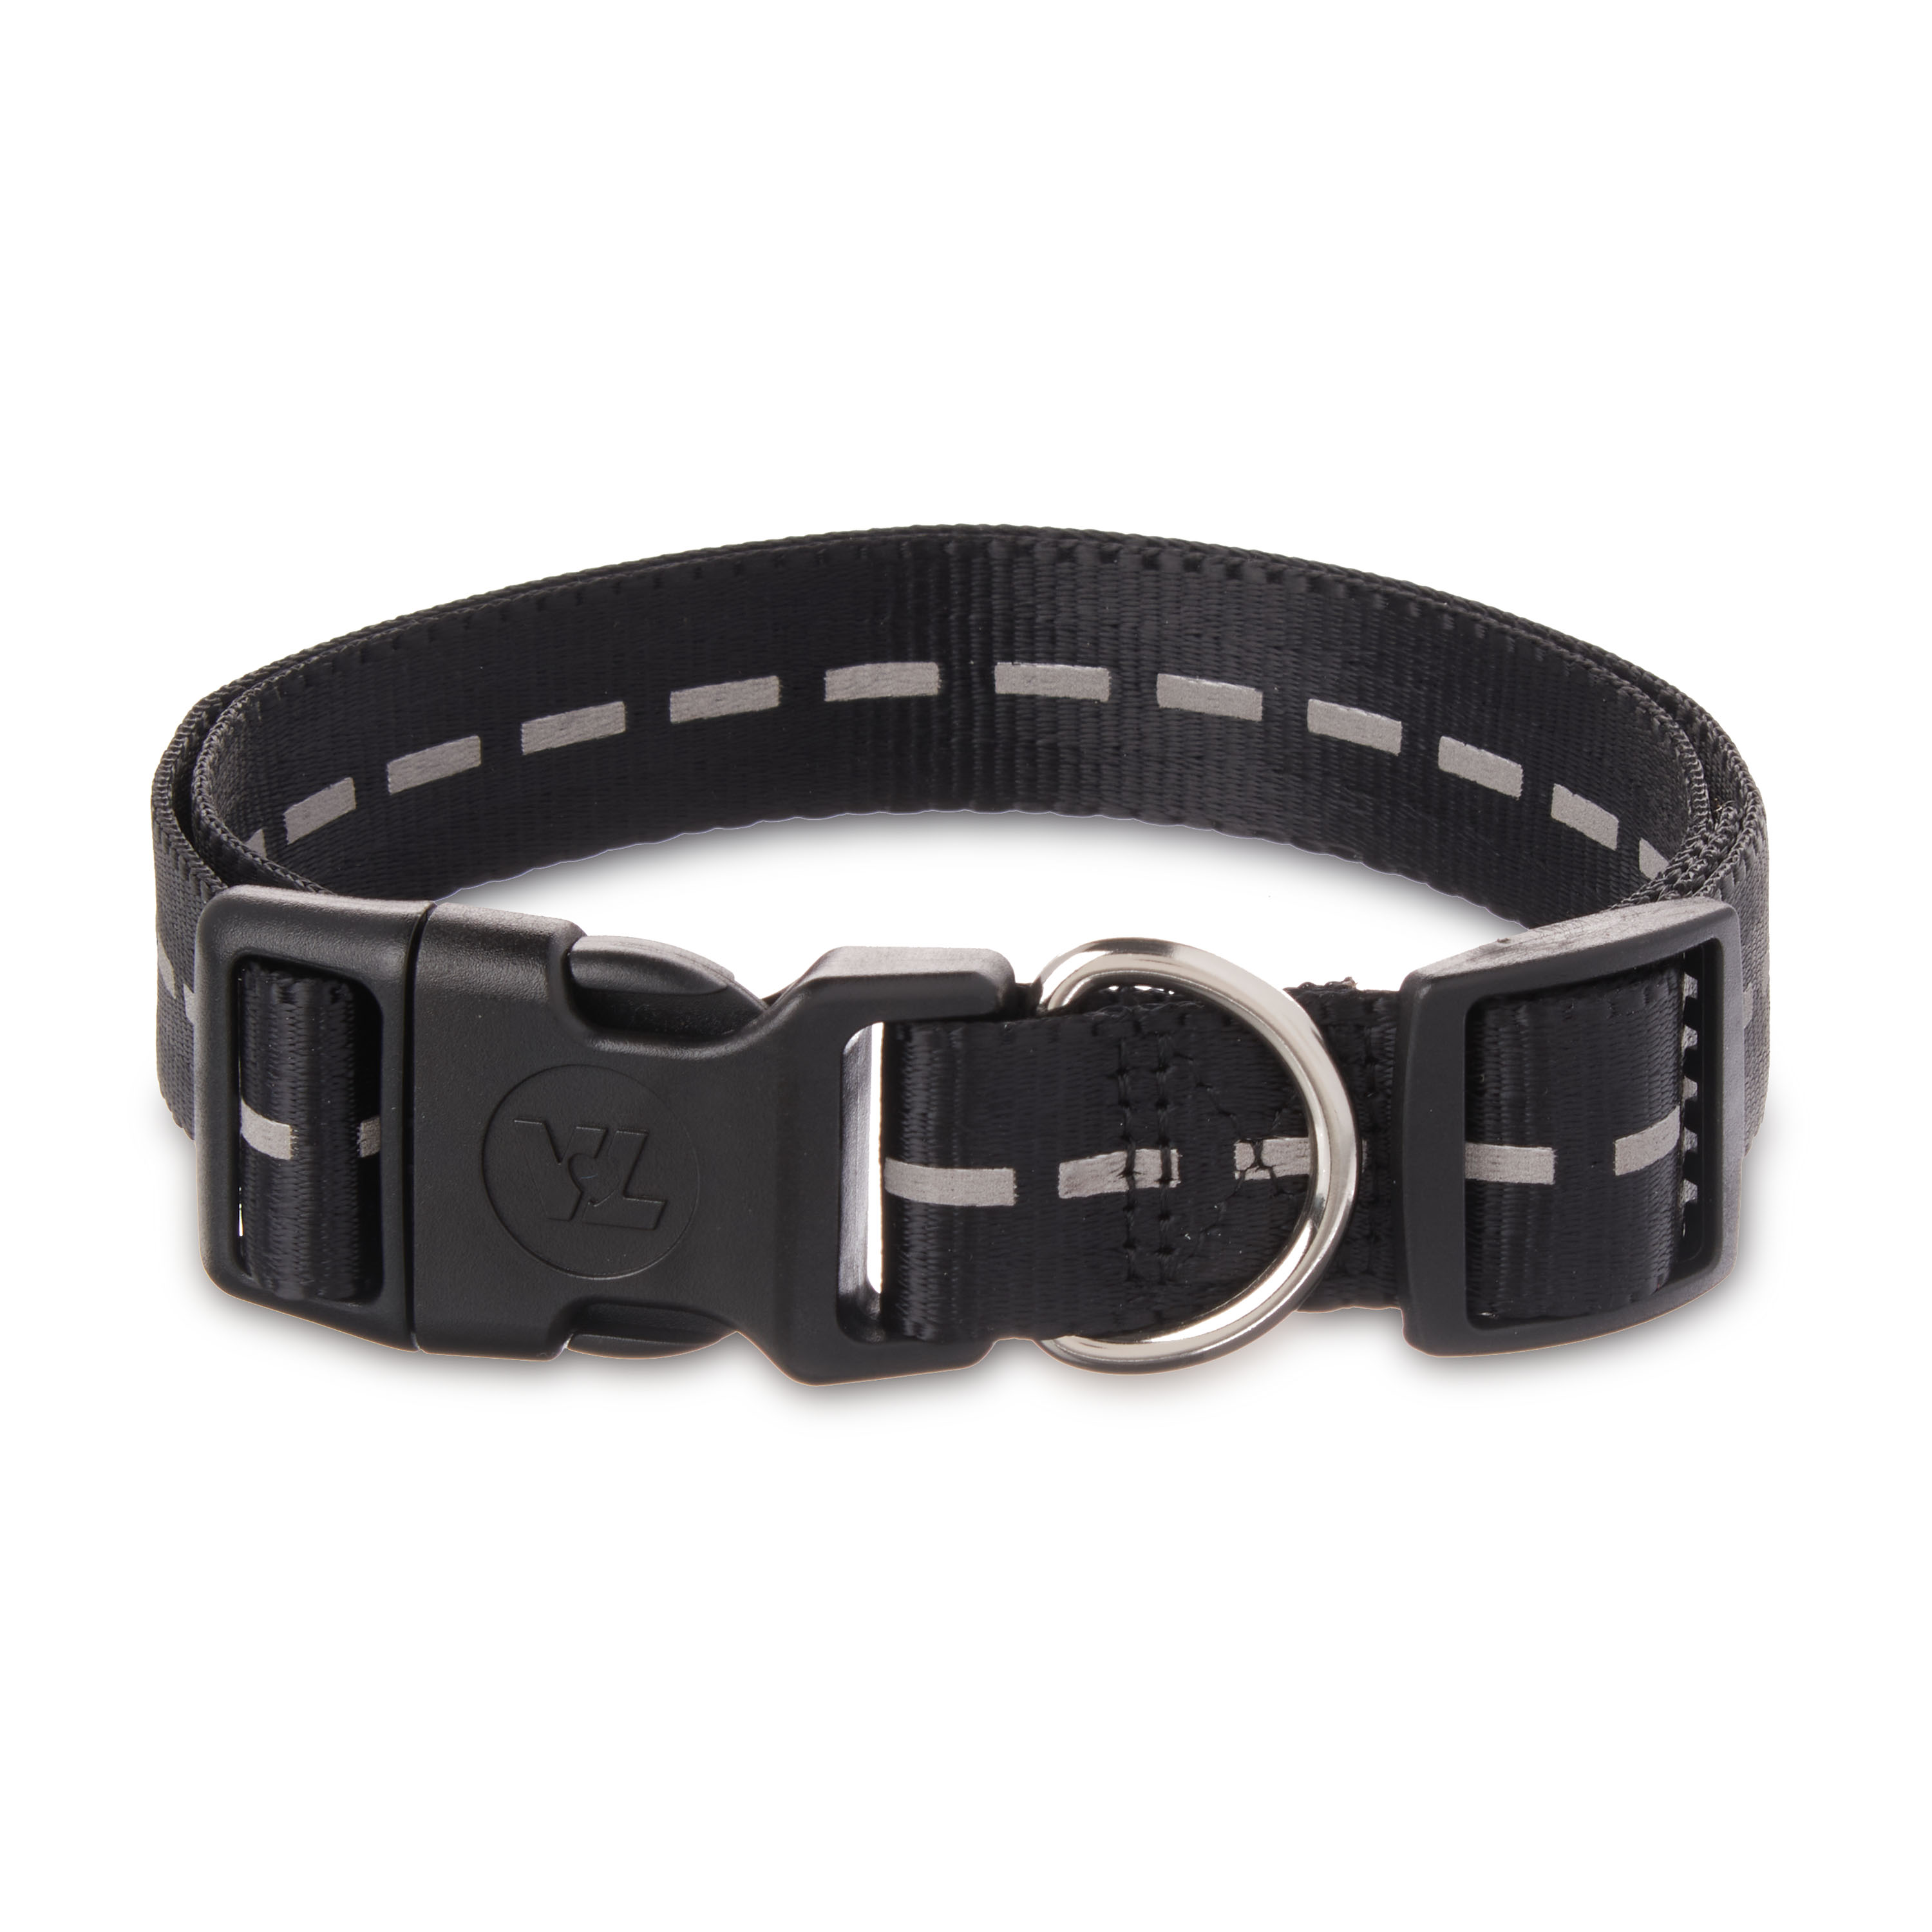 Vibrant Life Reflective Polyester Adjustable Dog Collar, Black, Large - image 1 of 5